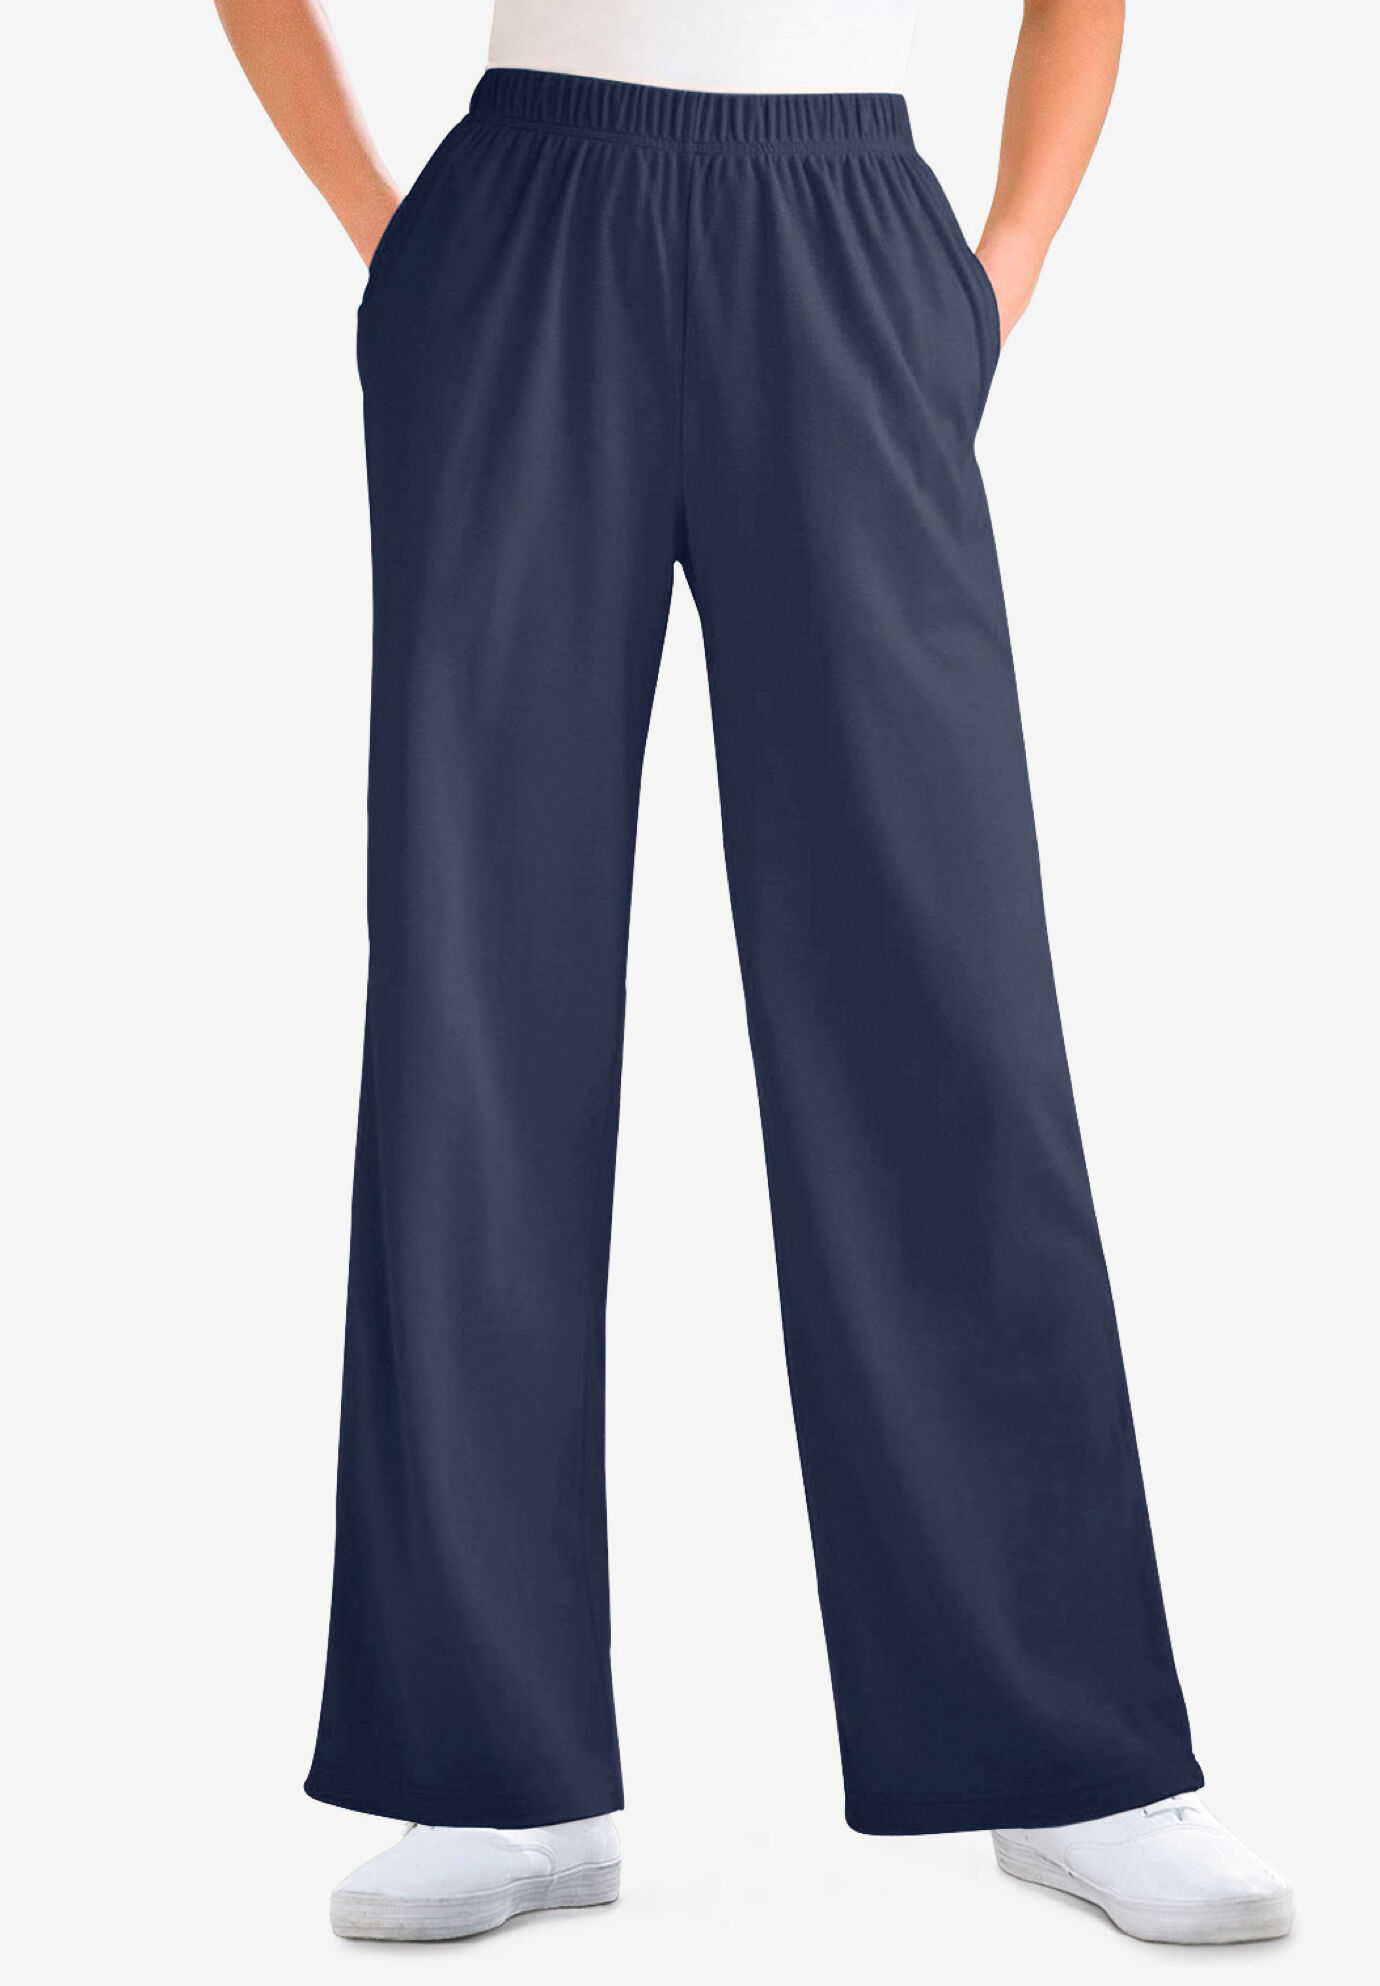 Buy Blue Pants for Women by W Online | Ajio.com